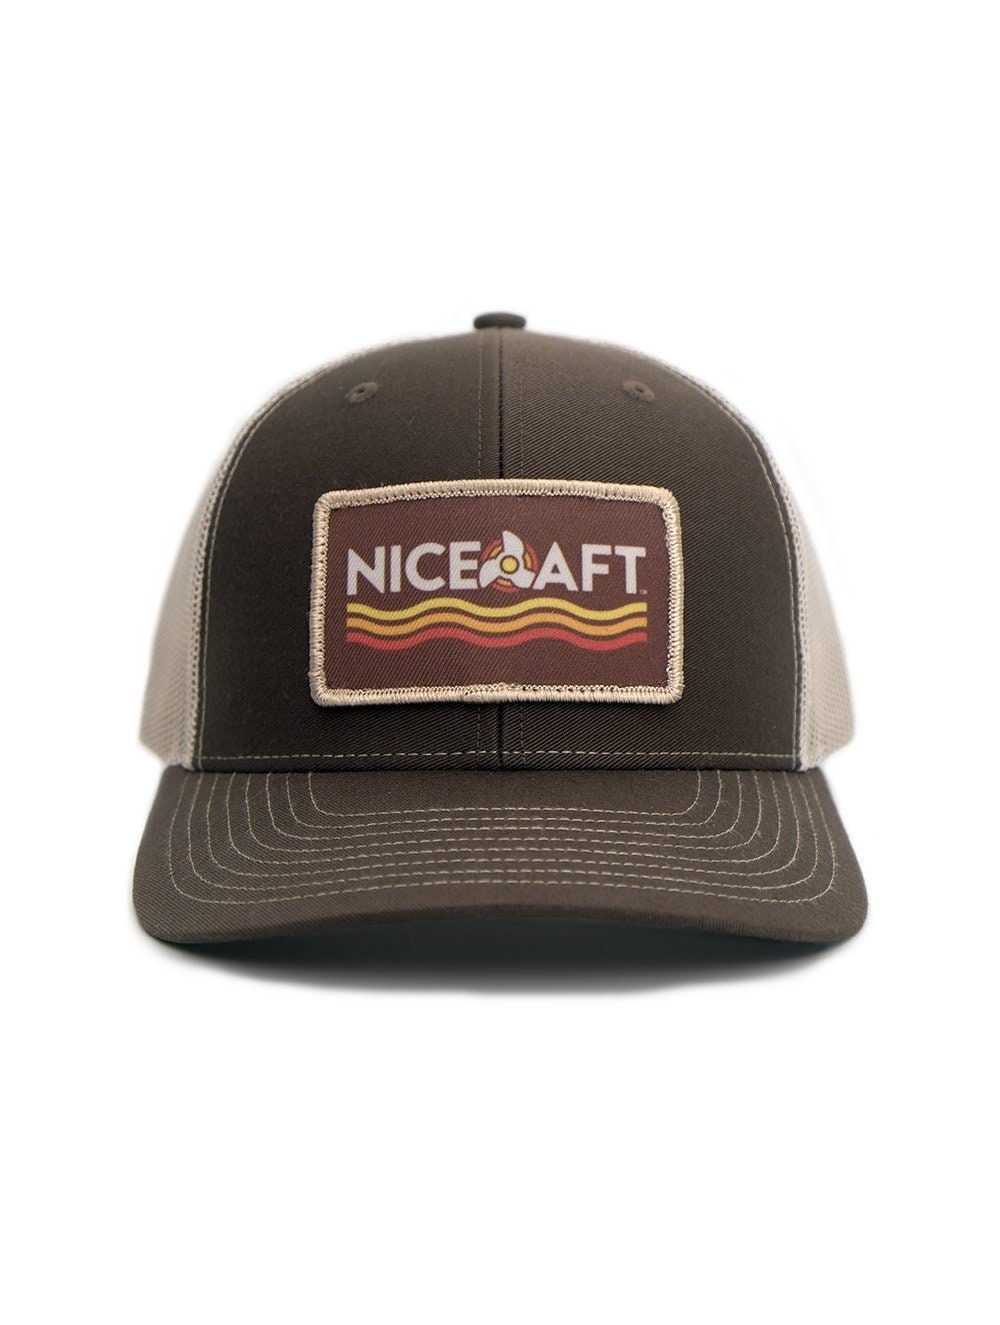 NICE AFT Mesh Snapback Hat Retro Brown Boater Hat Lake | Etsy